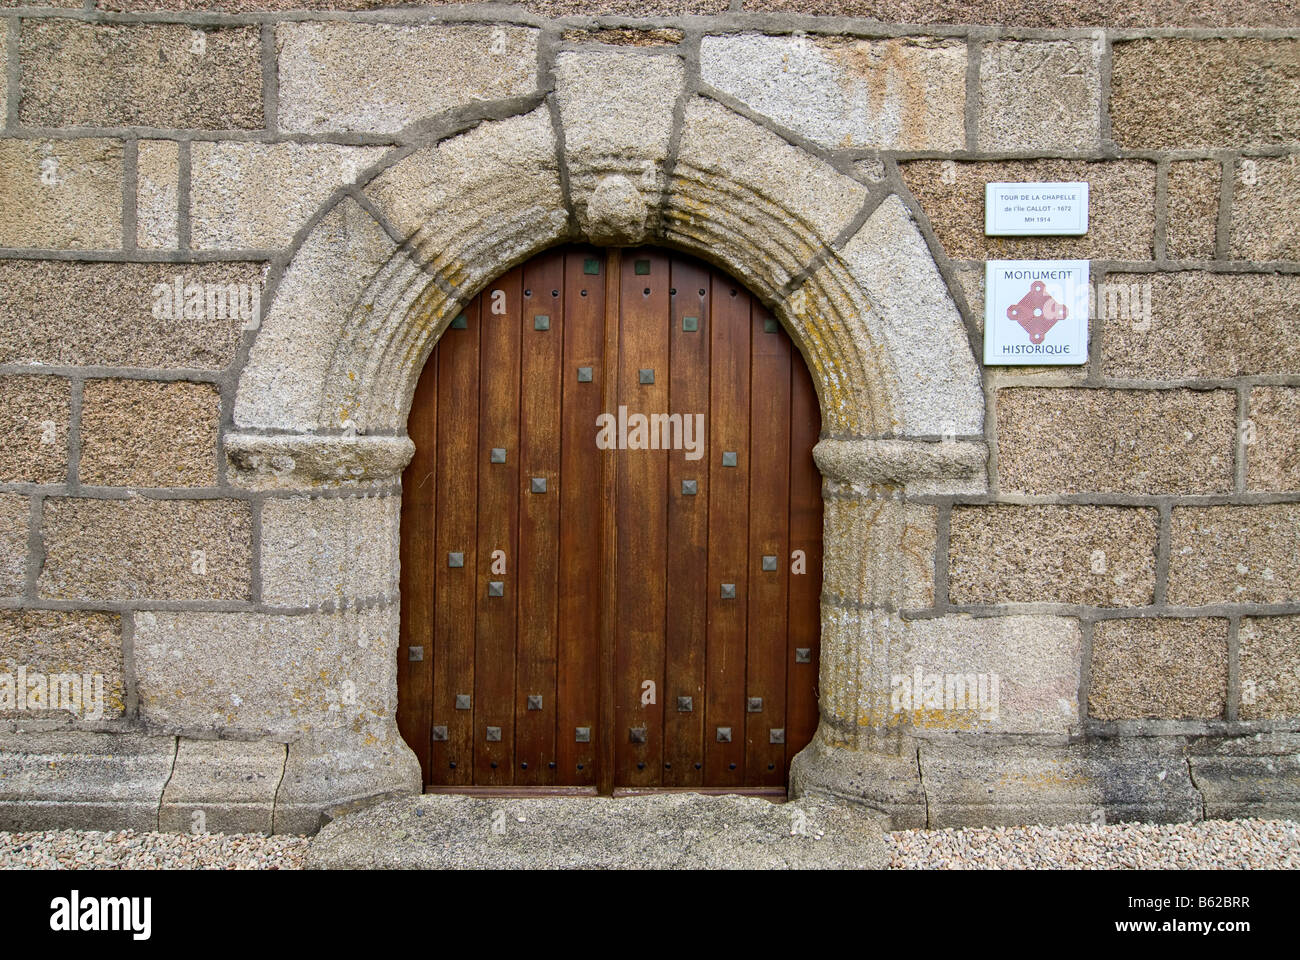 Entrada a la capilla en la isla Callot, monumento histórico, Bretagne, Bretaña, Francia, Europa Foto de stock